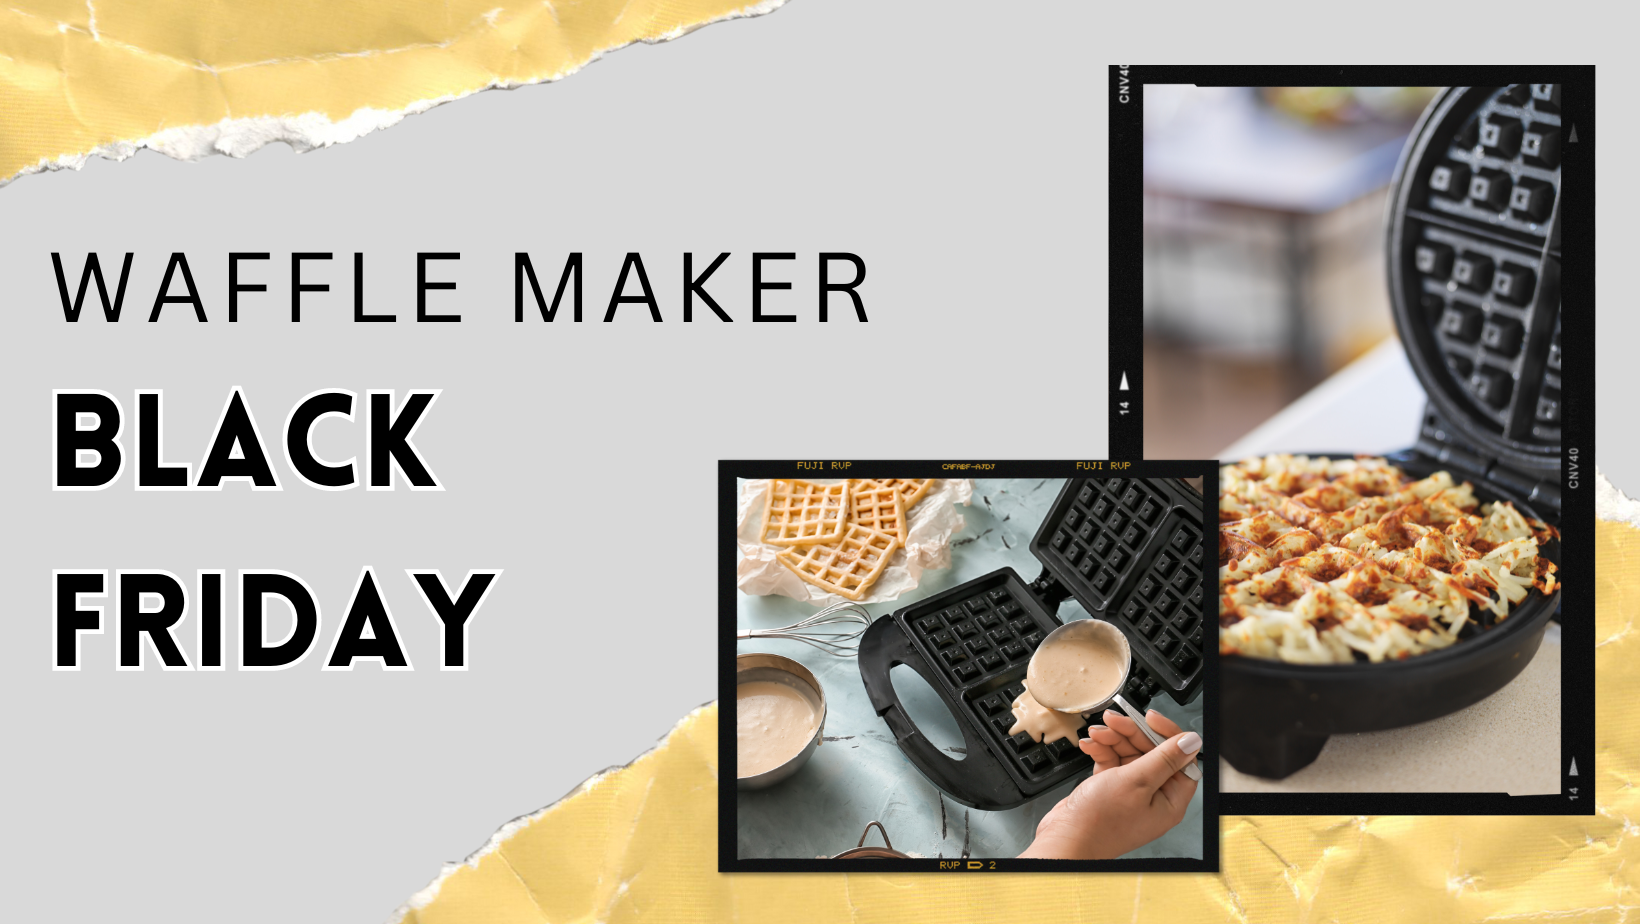 Waffle Maker Black Friday Everyday Is Black Friday Deals